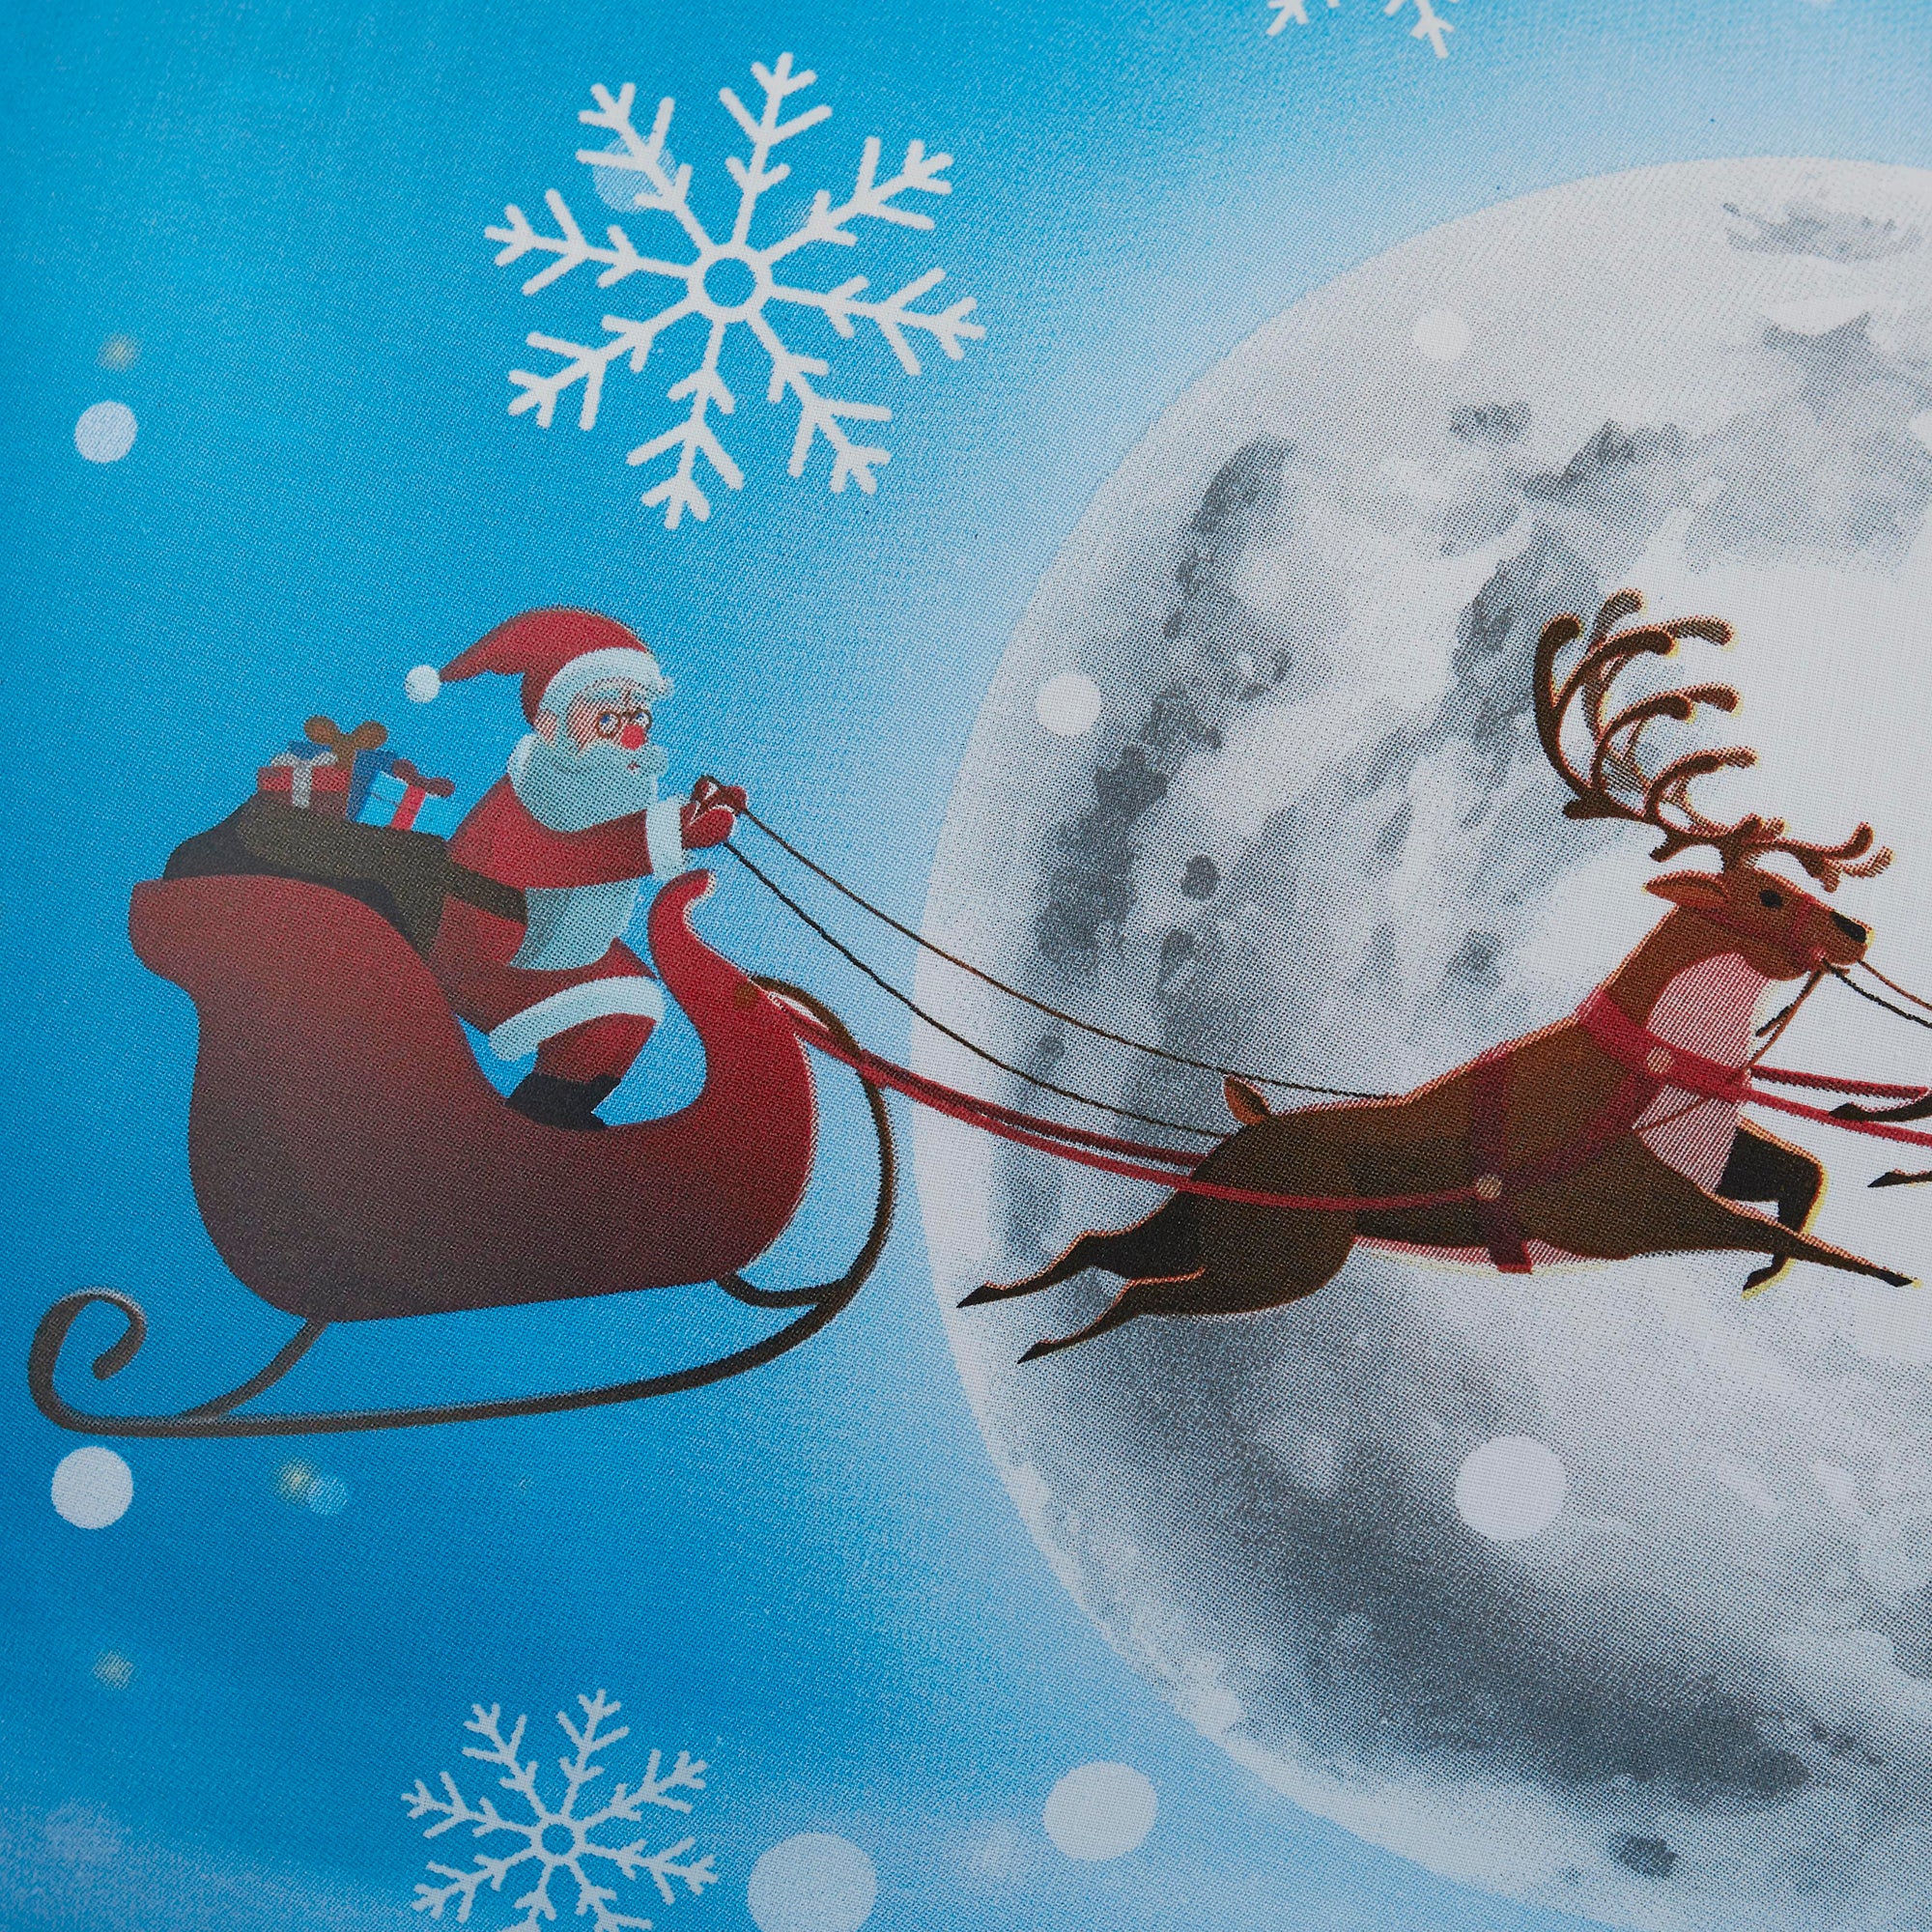 Santa Glow In The Dark - Christmas Duvet Cover Set - By Bedlam Christmas